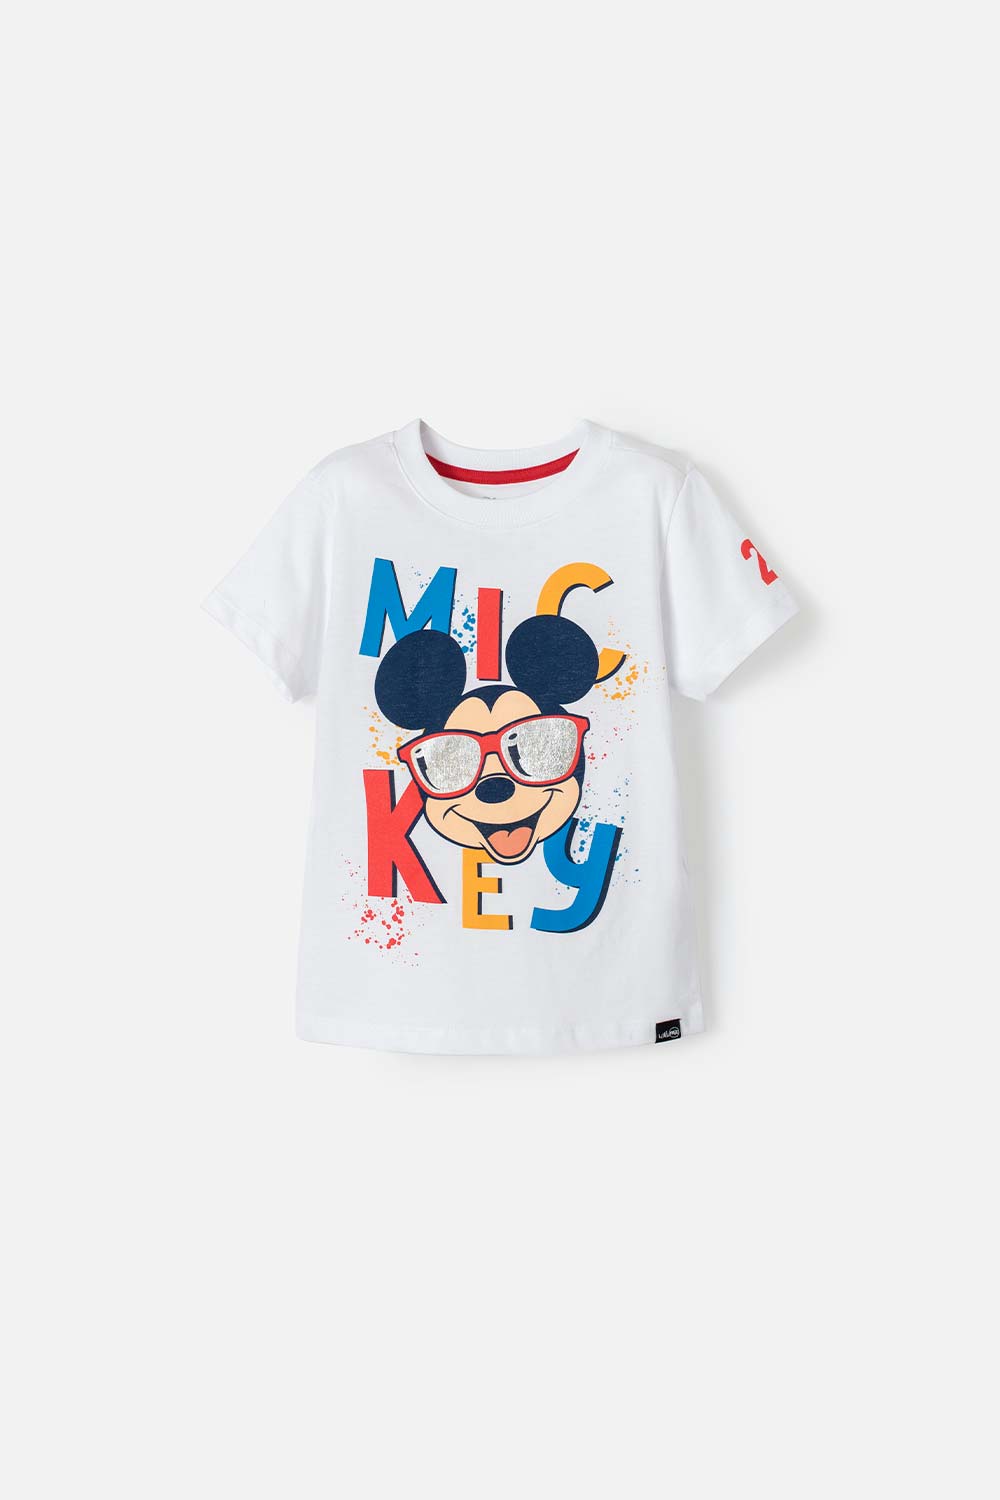 Camiseta de Mickey  manga corta blanco para niño 2t a 5t 4T-0